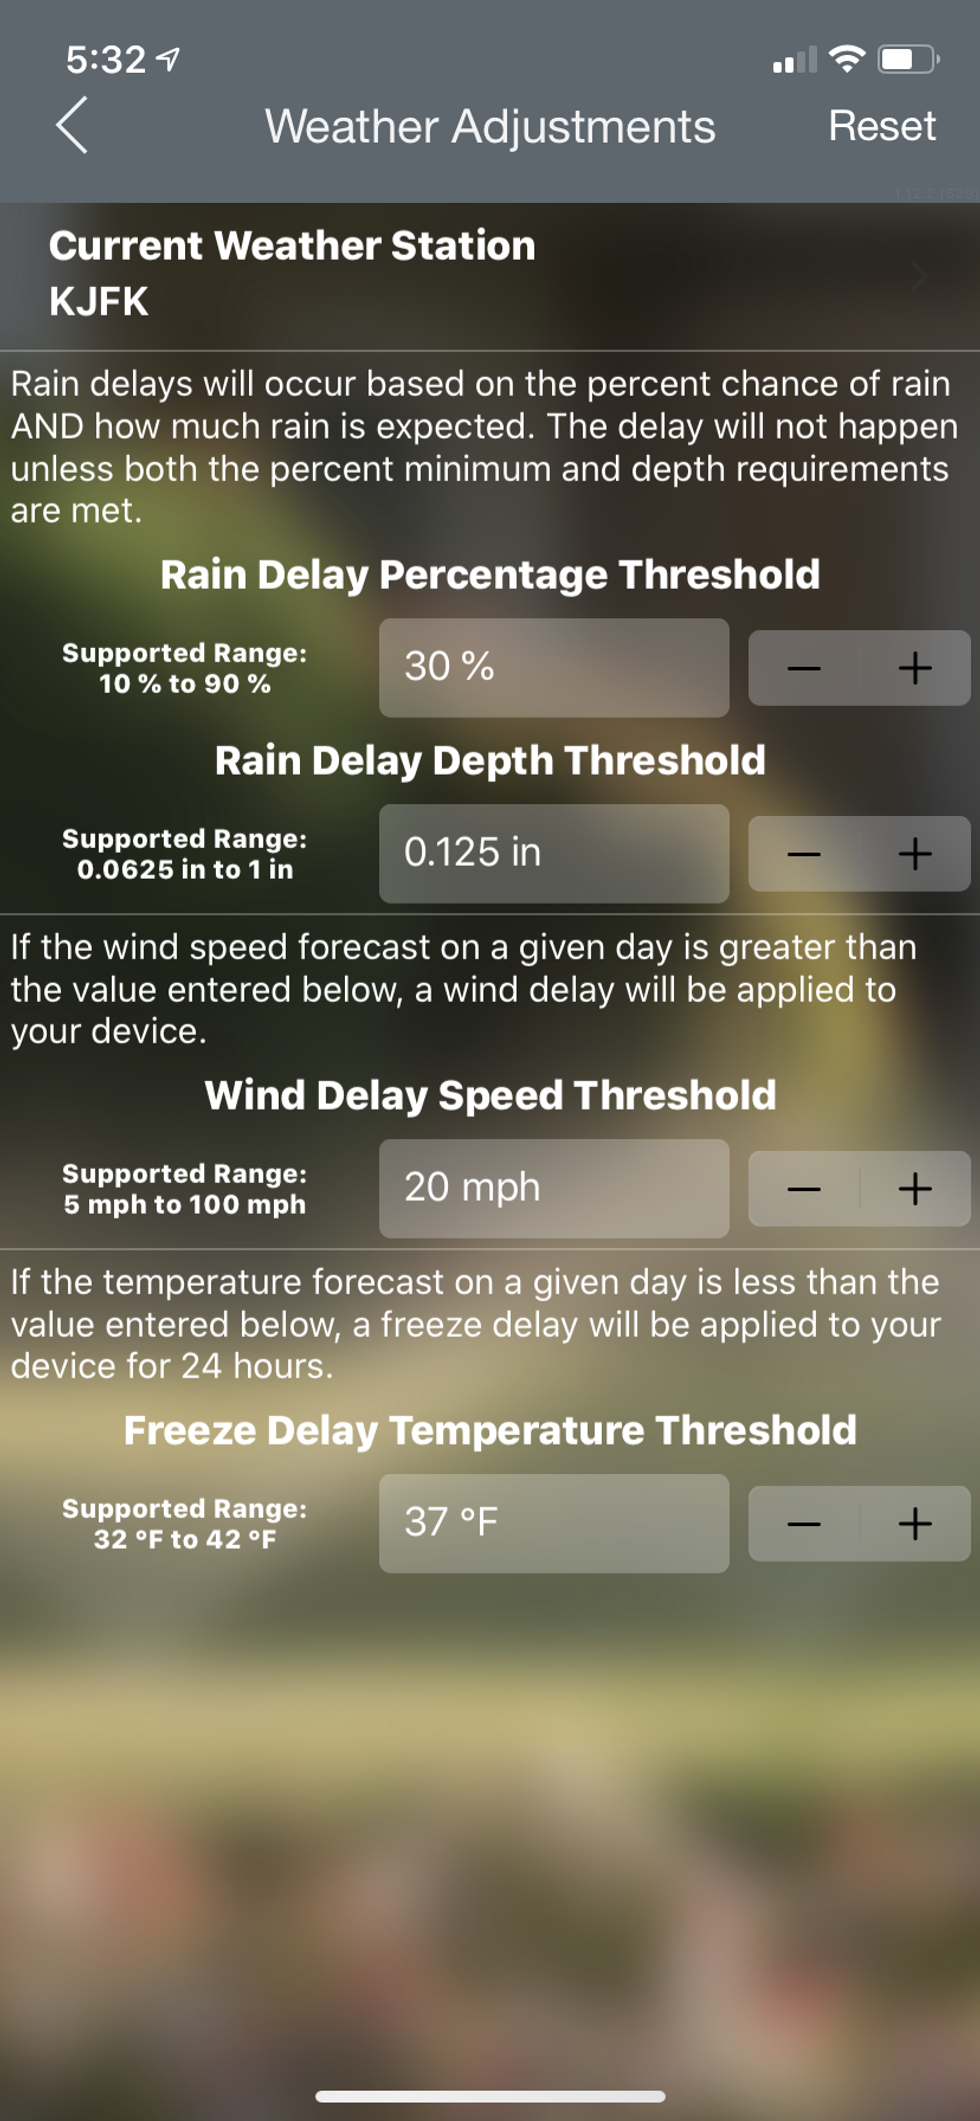 Can adjust weather settings in Orbit app.